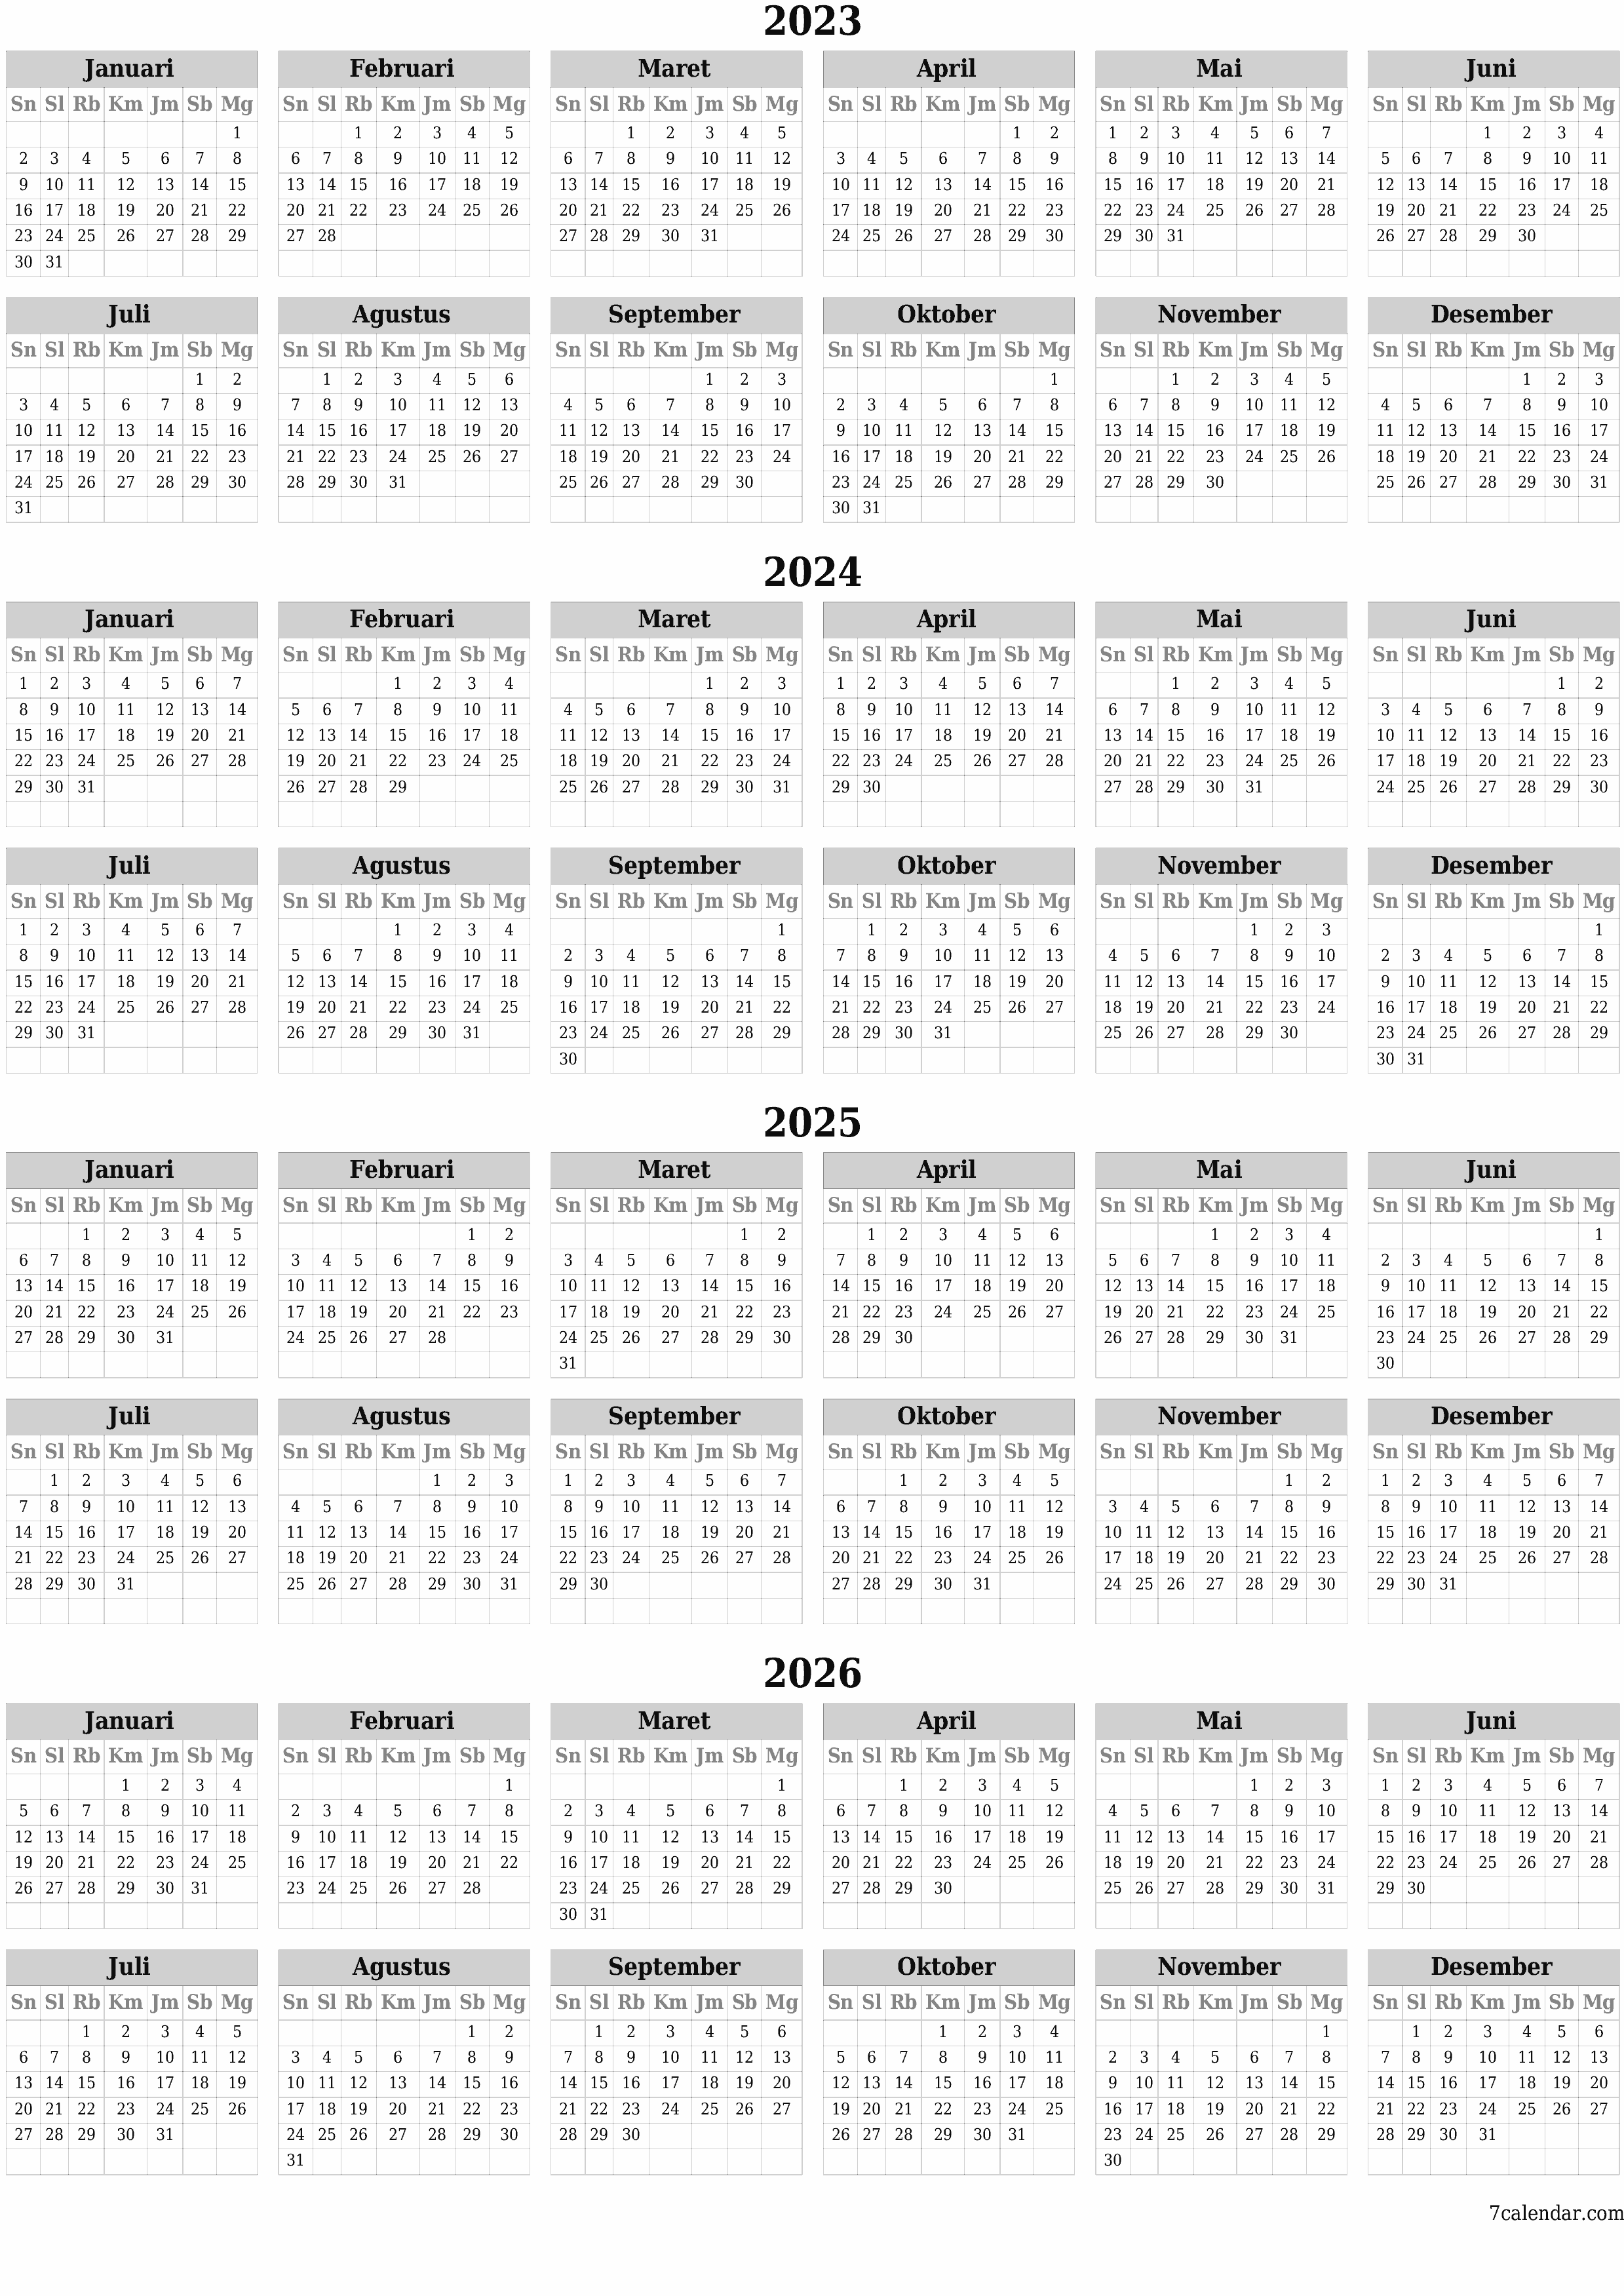  yang dapat dicetak dinding templat gratisvertikal Tahunan kalender Januari (Jan) 2023